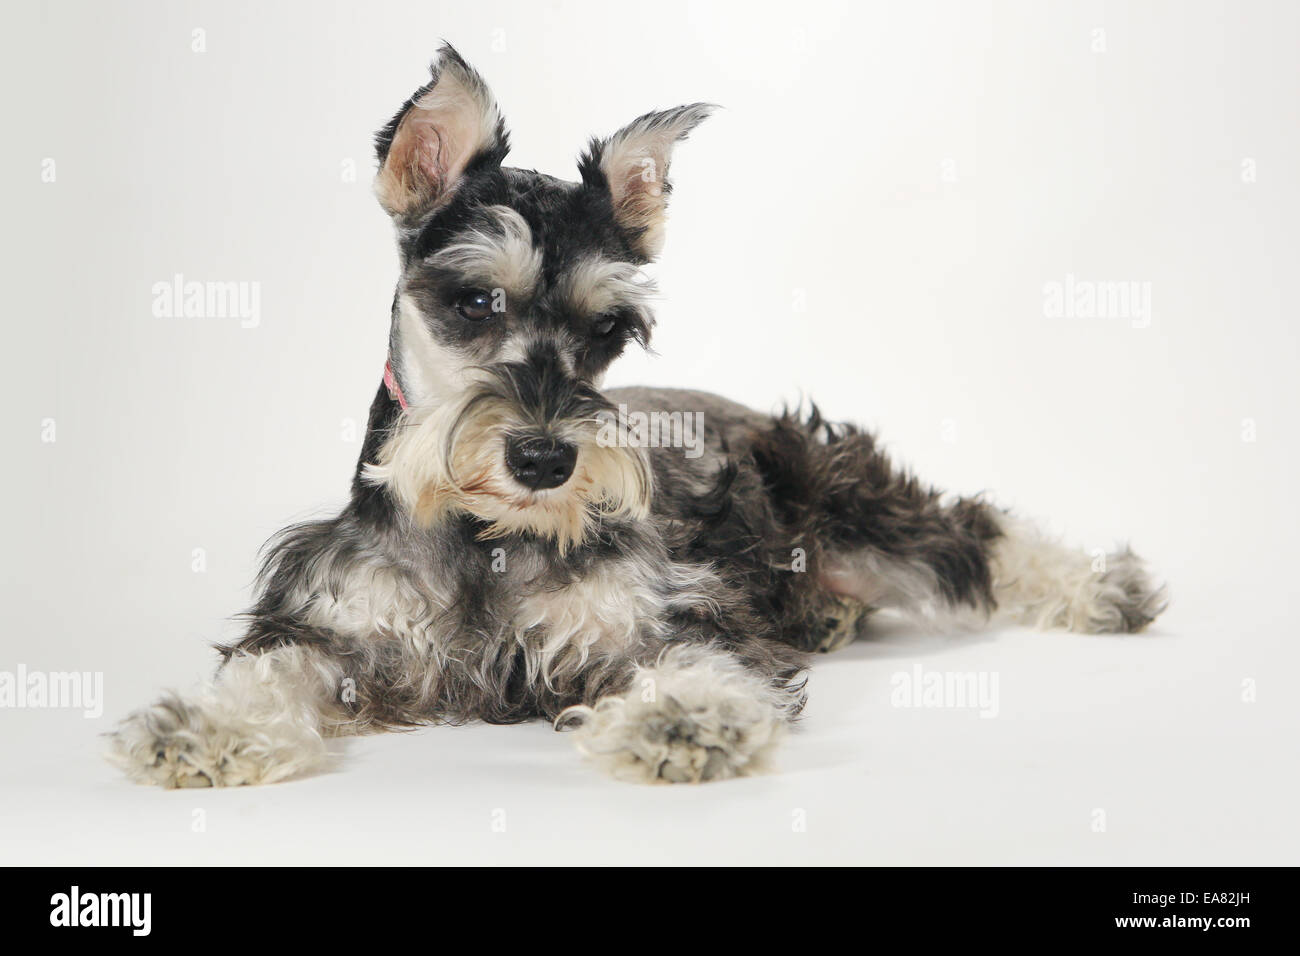 Miniature Schnauzer Puppy Dog on White Background Stock Photo